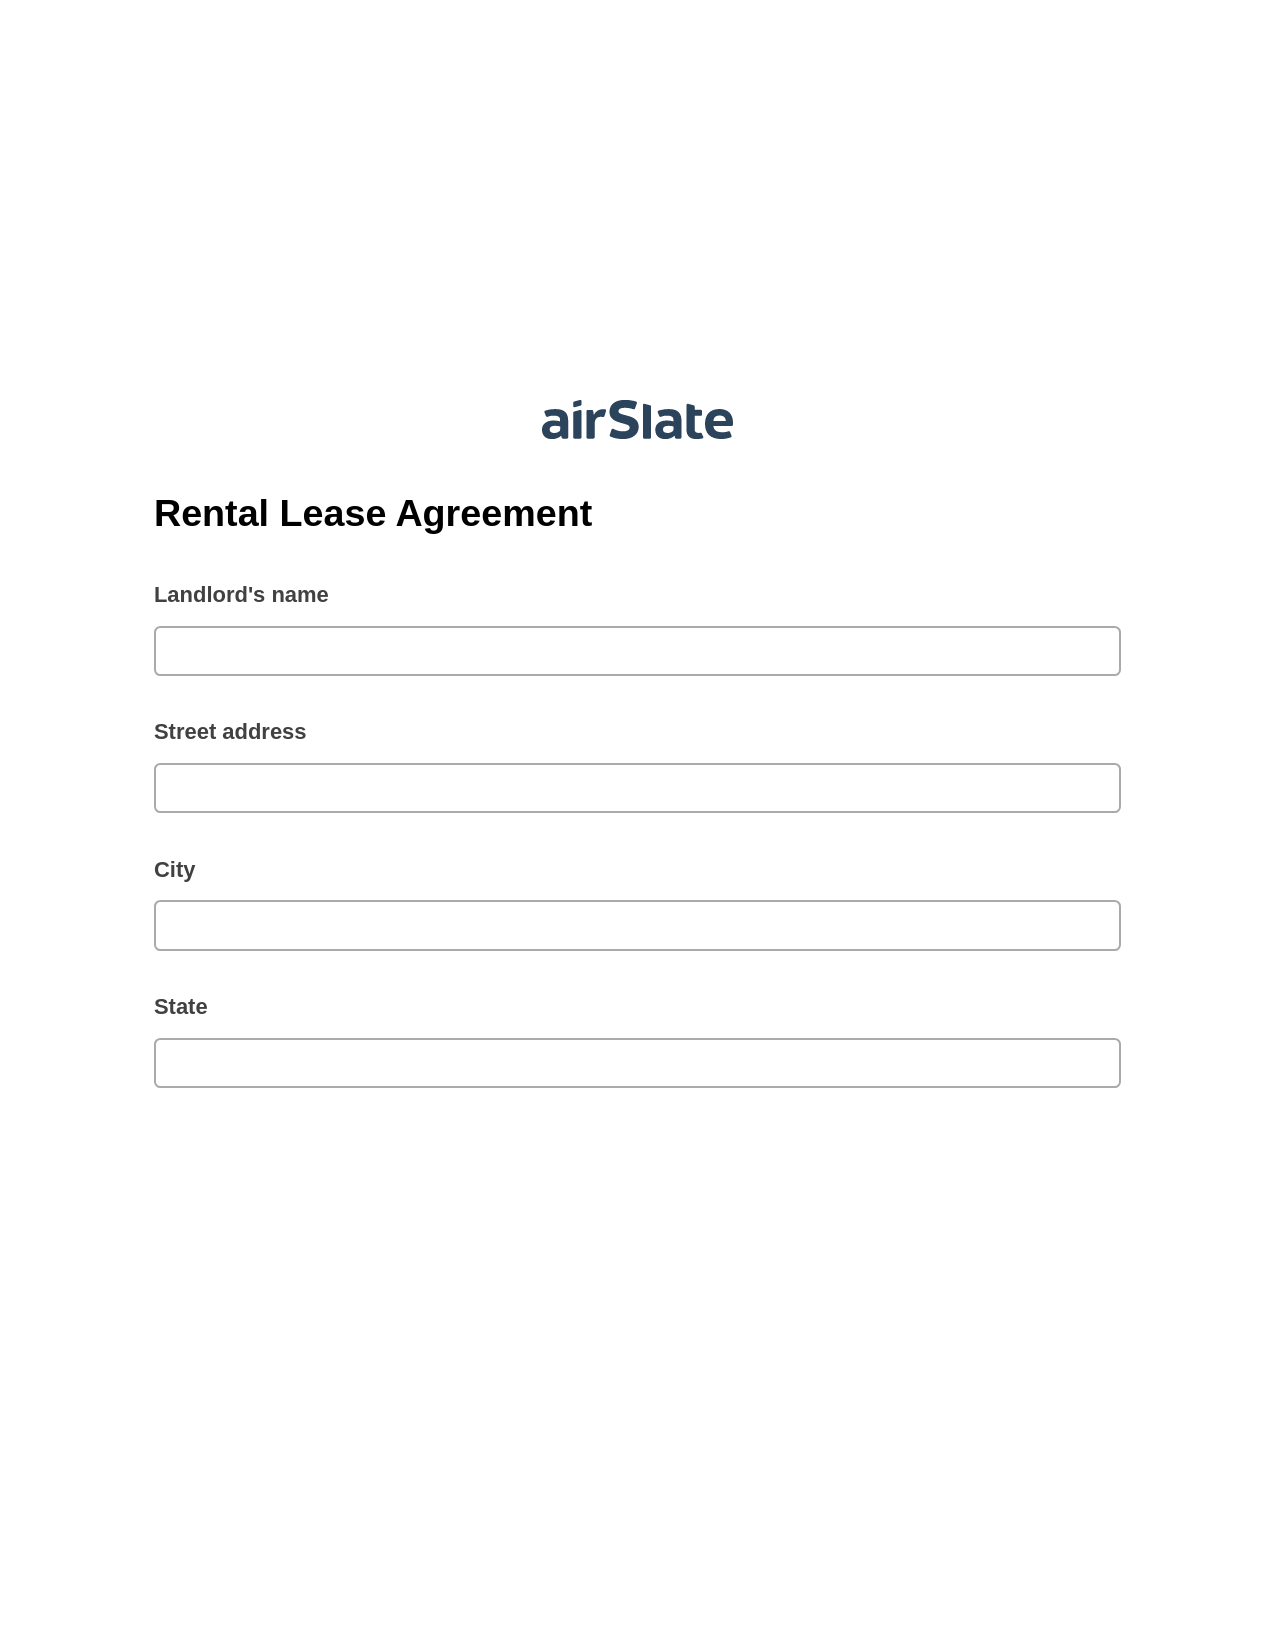 Multirole Rental Lease Agreement Pre-fill from Litmos bot, Update NetSuite Records Bot, OneDrive Bot